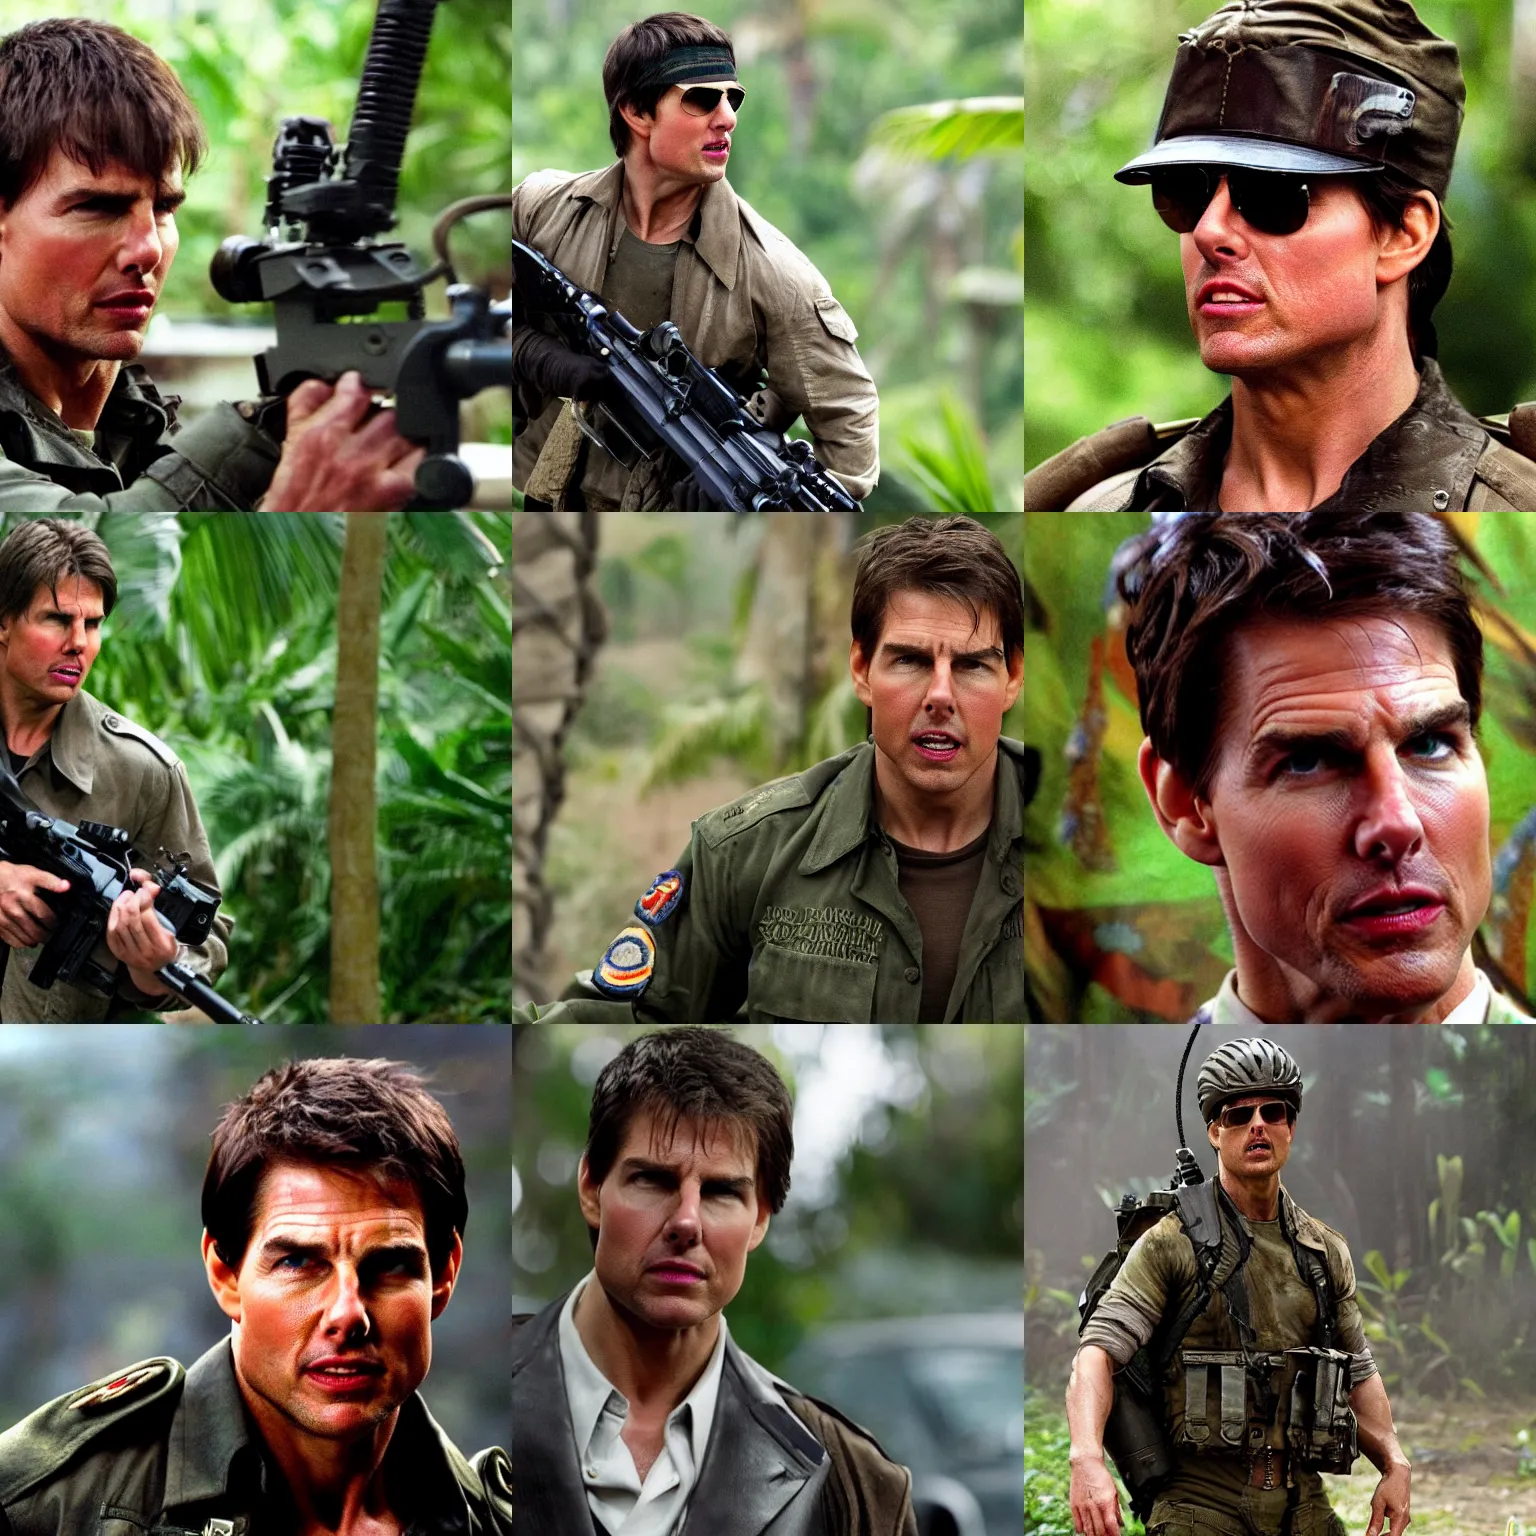 Prompt: Tom Cruise in Tropic Thunder by Ben Stiller